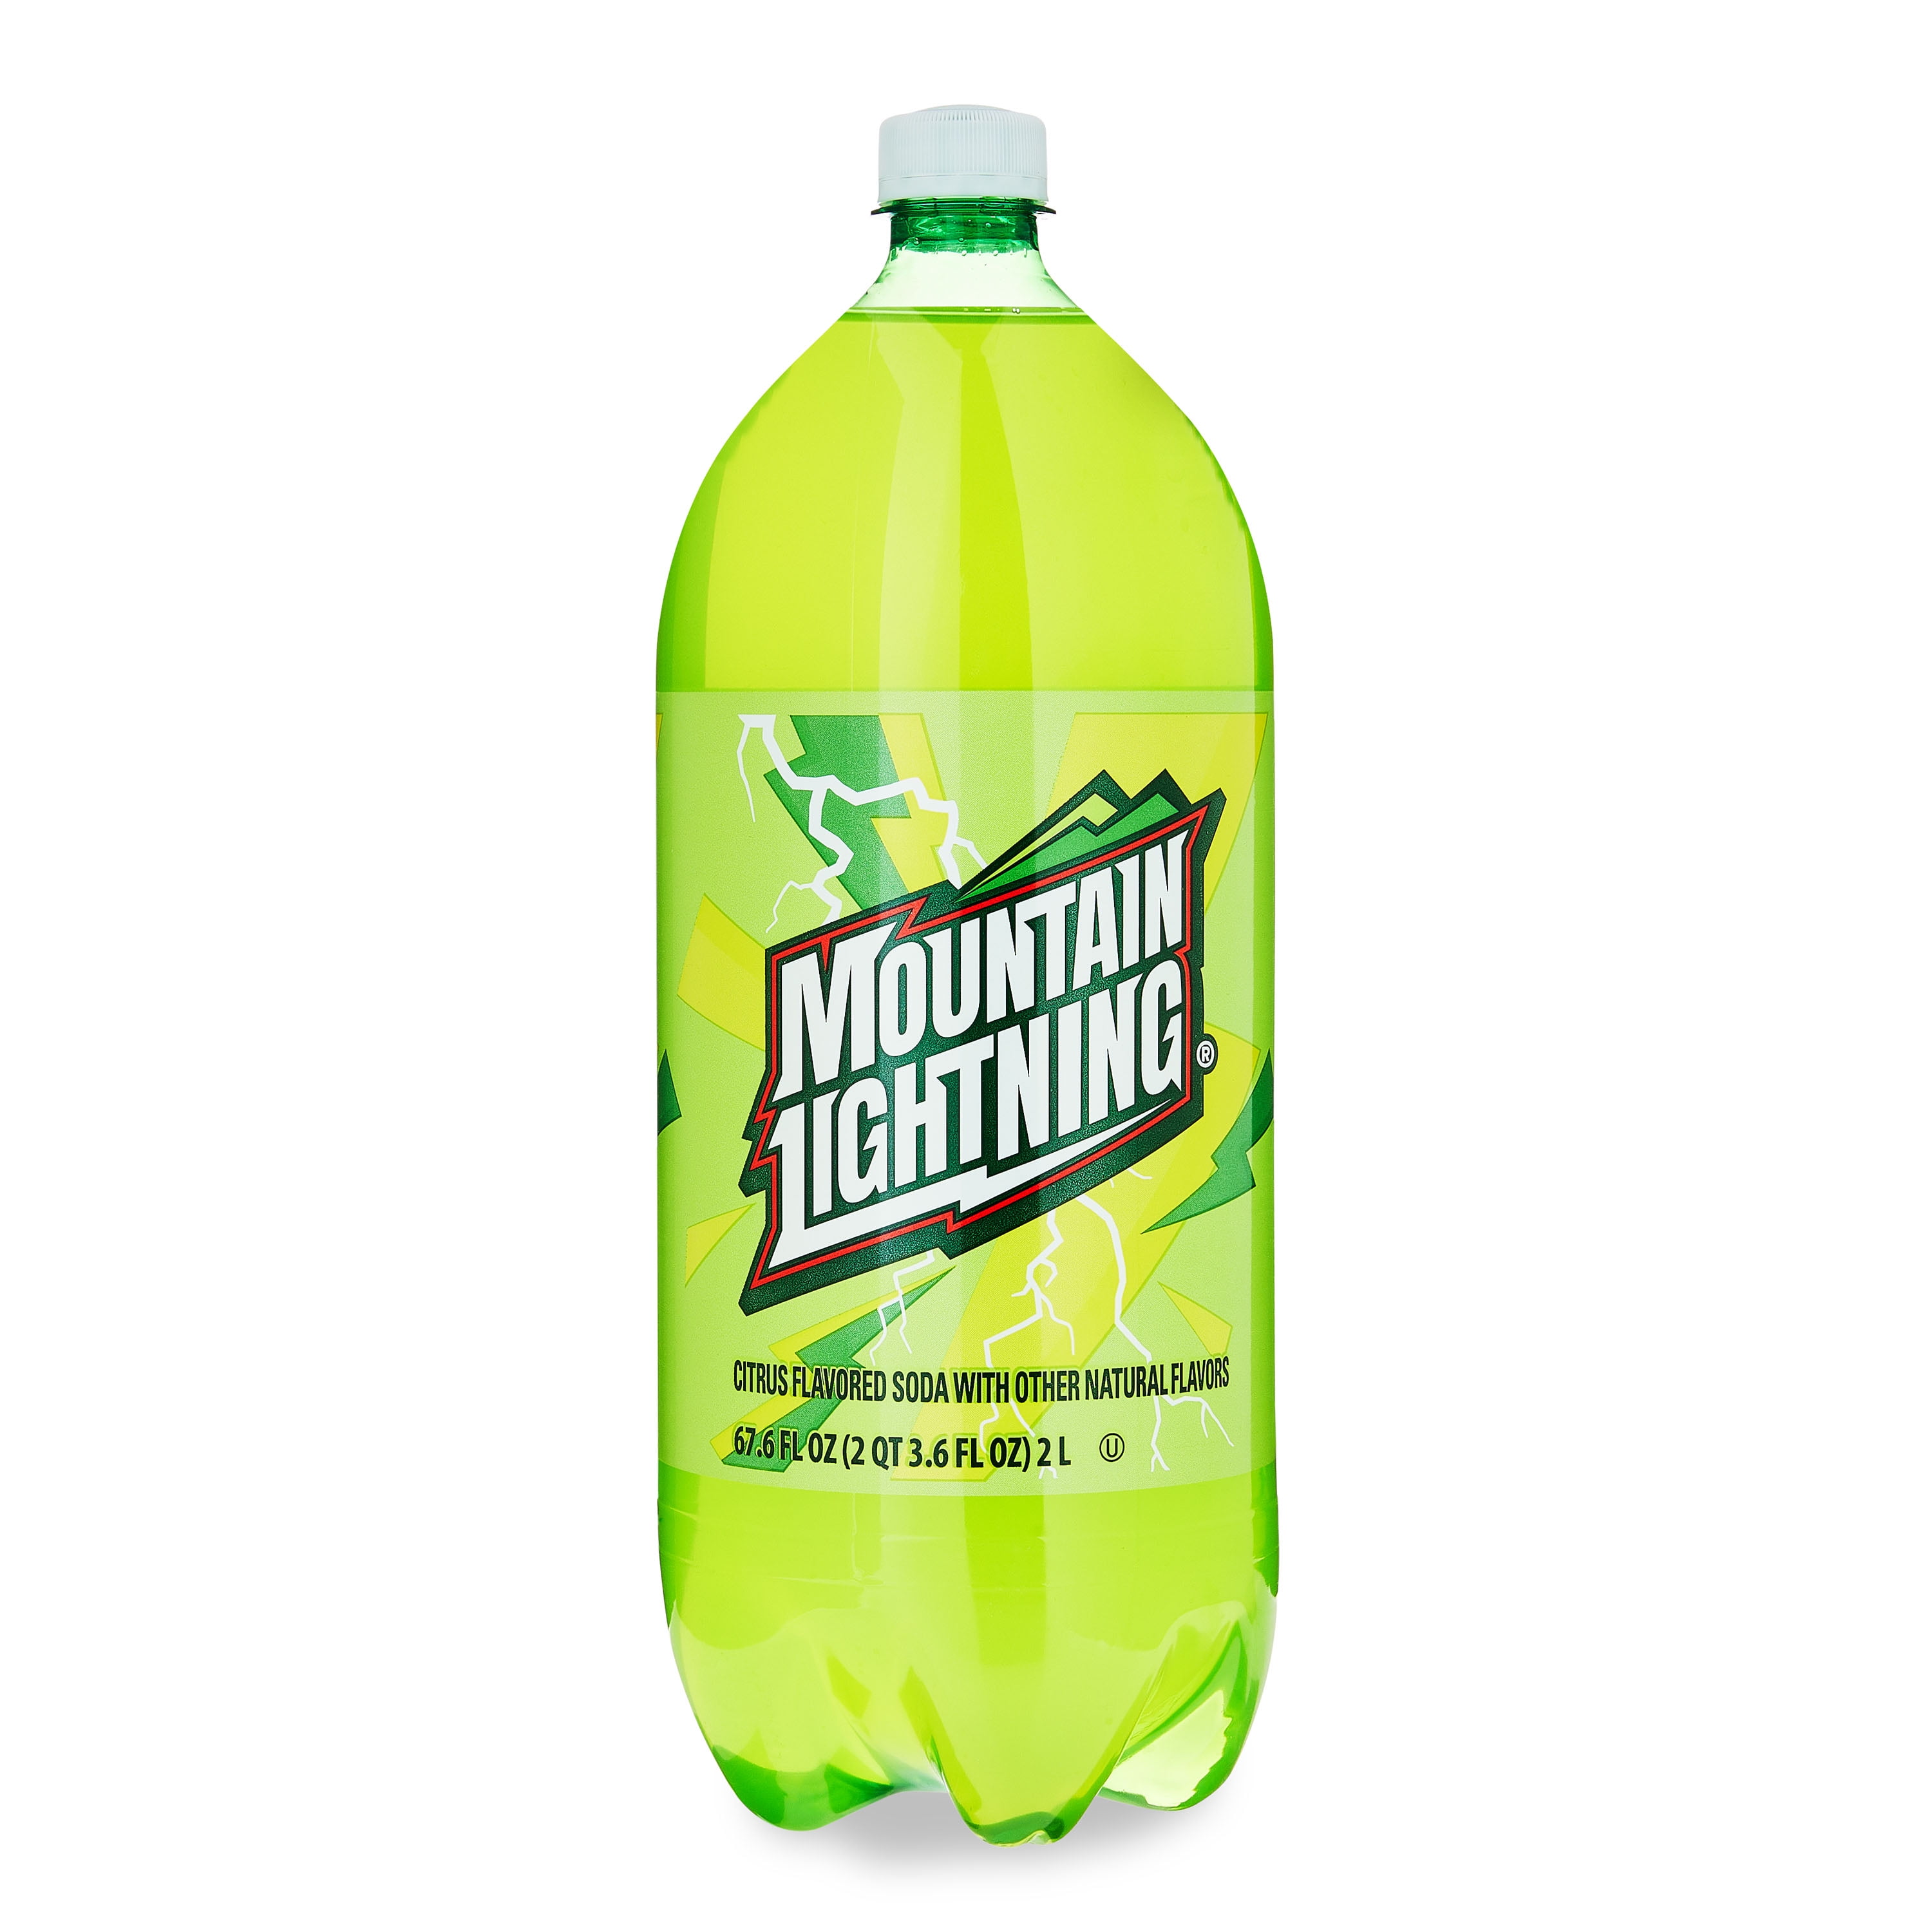 Great Value Mountain Lightning Citrus Flavored Soda Pop, 2 Liter